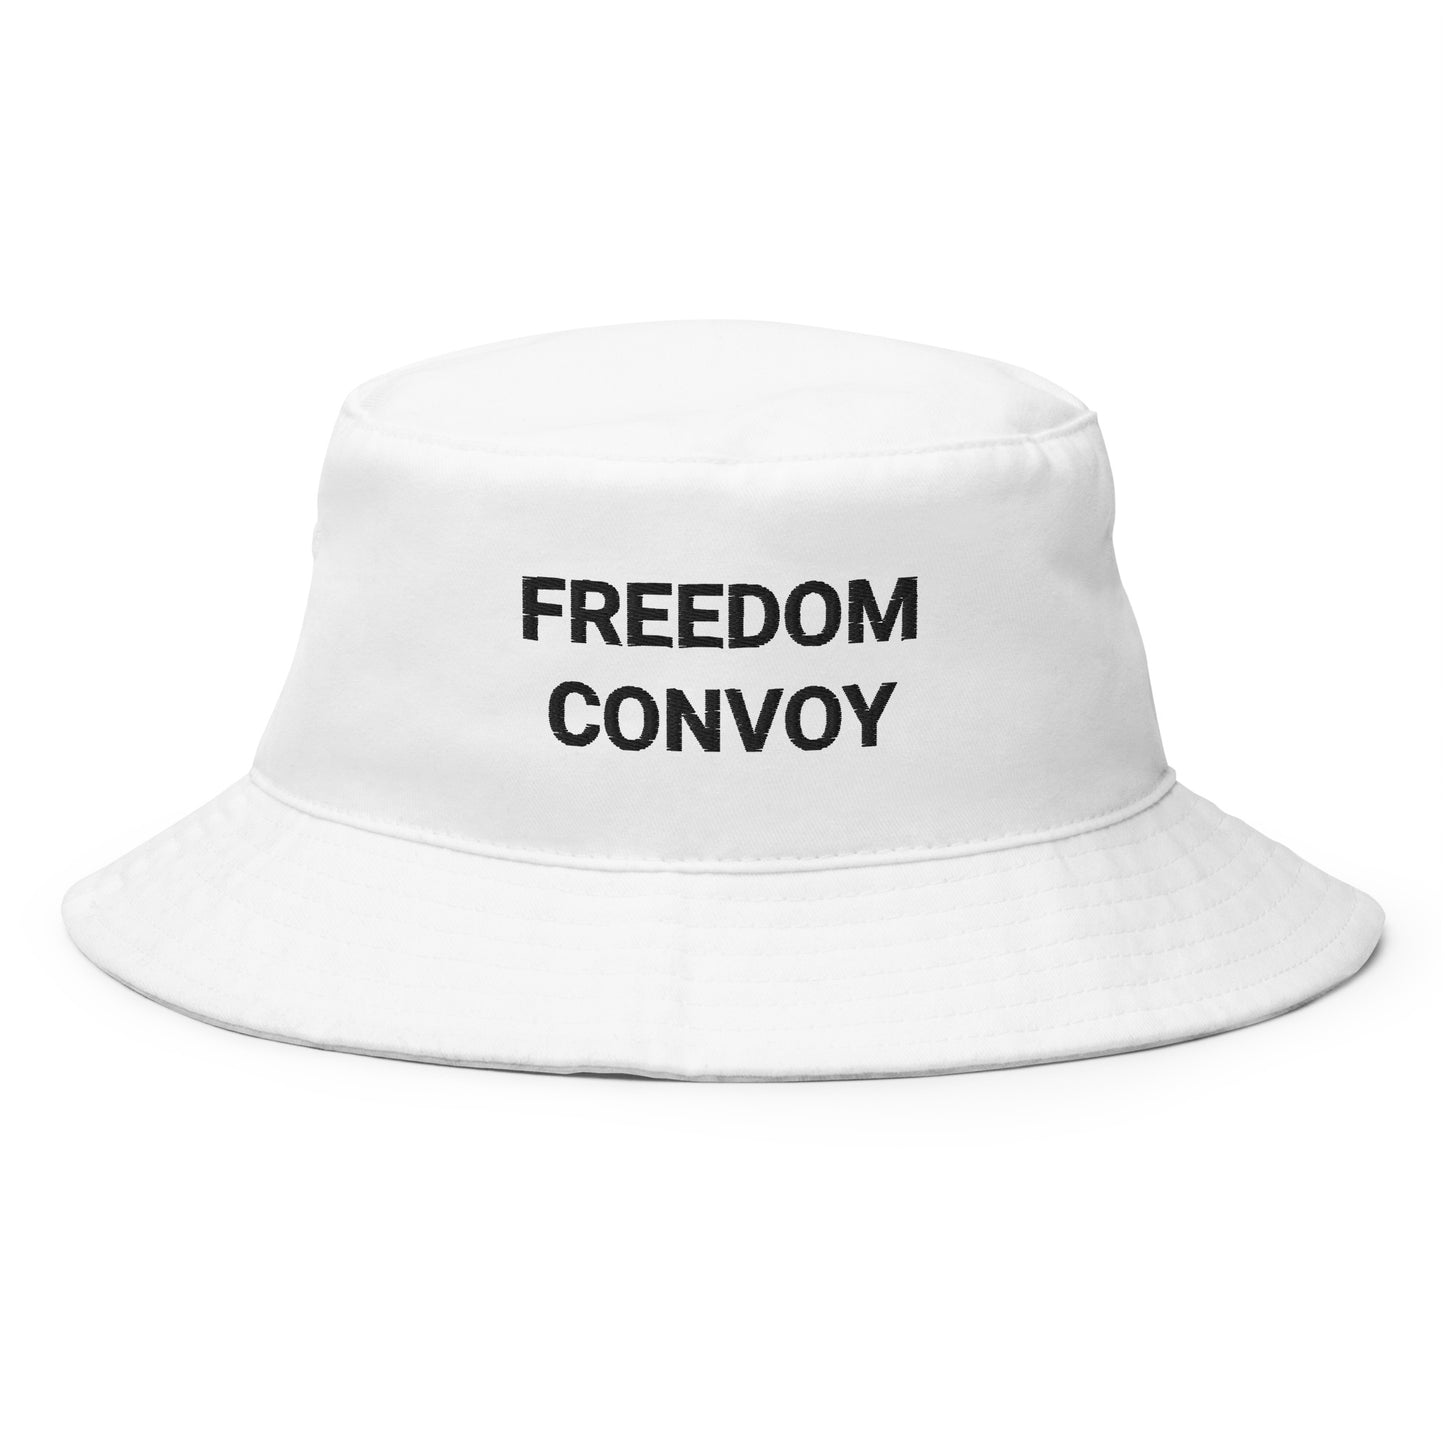 Freedom Convoy Bucket White Hat.